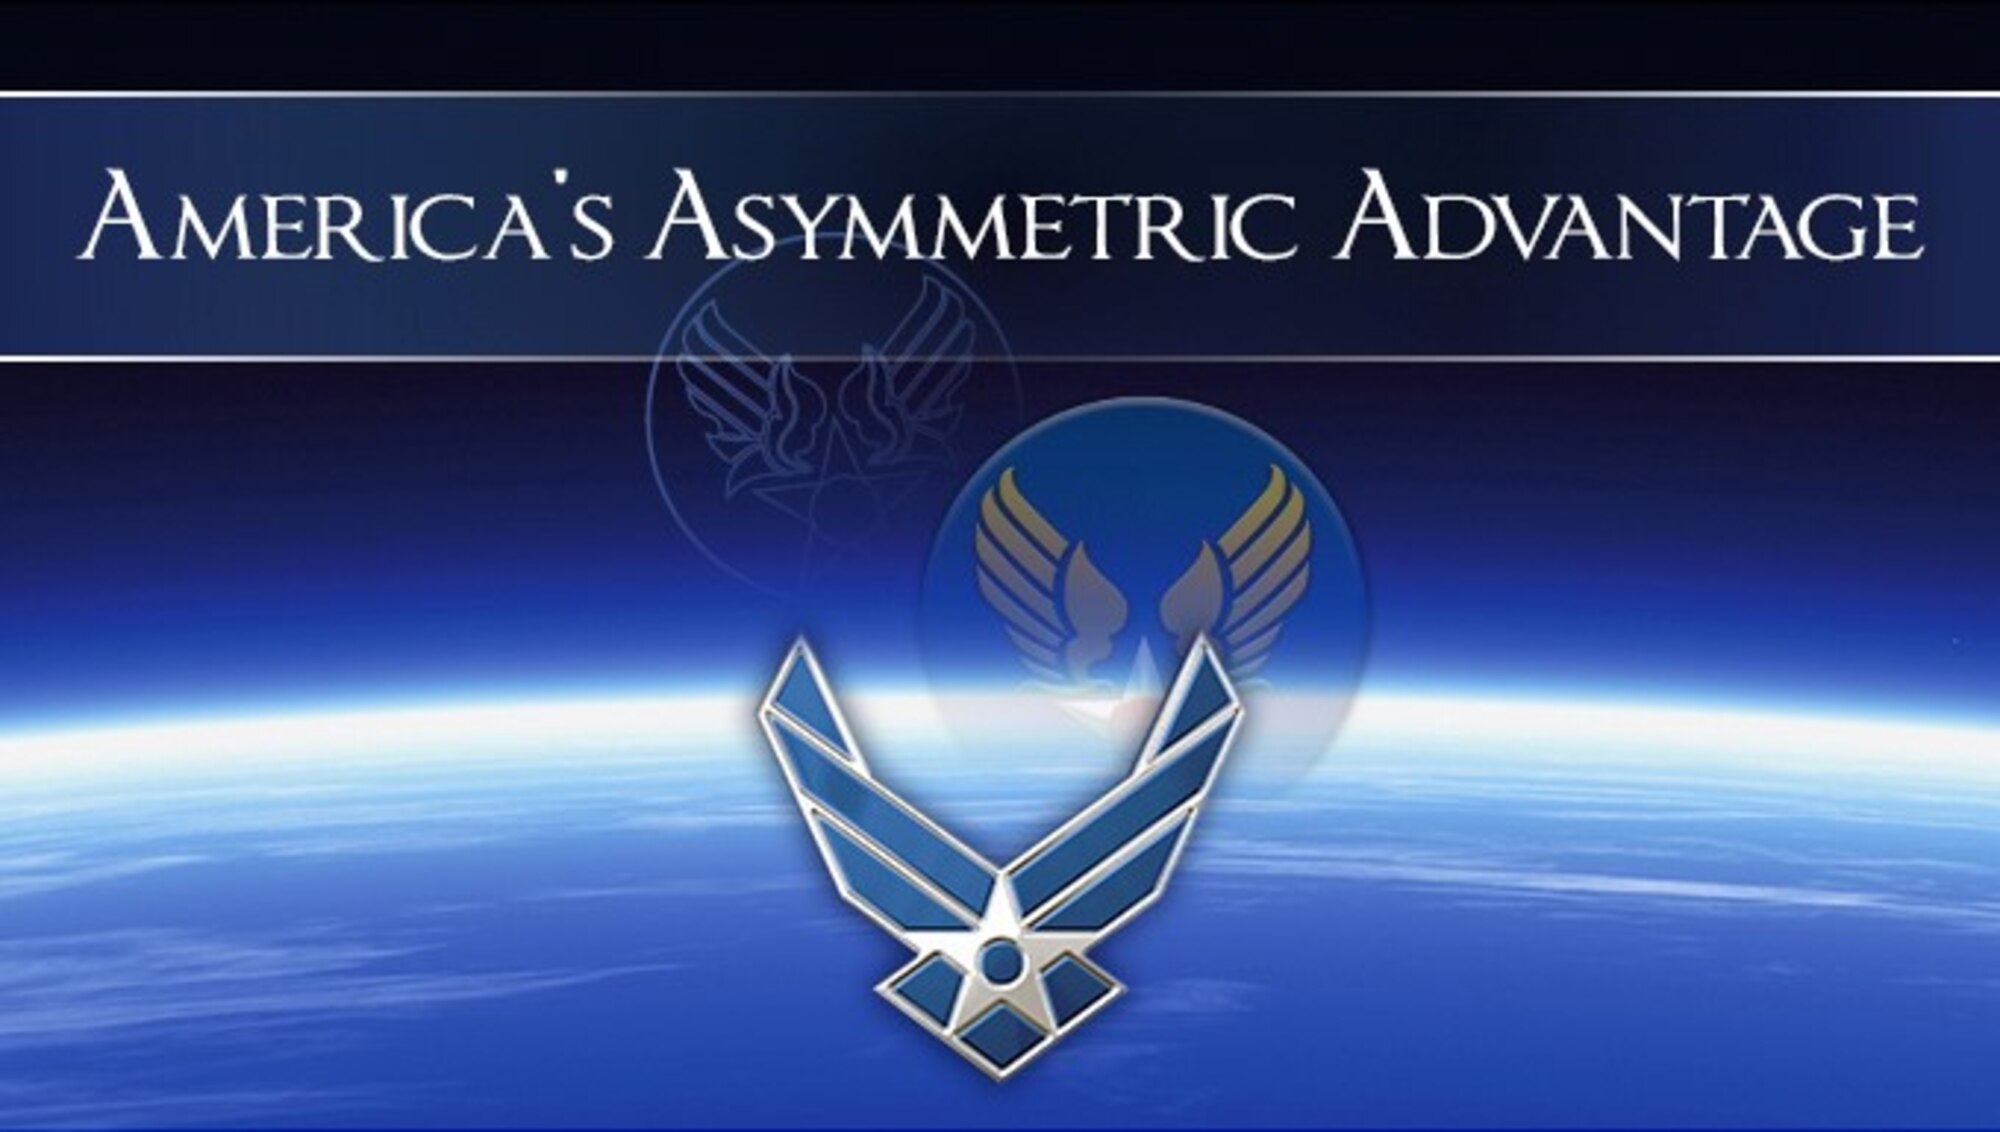 America's Asymmetric Advantage